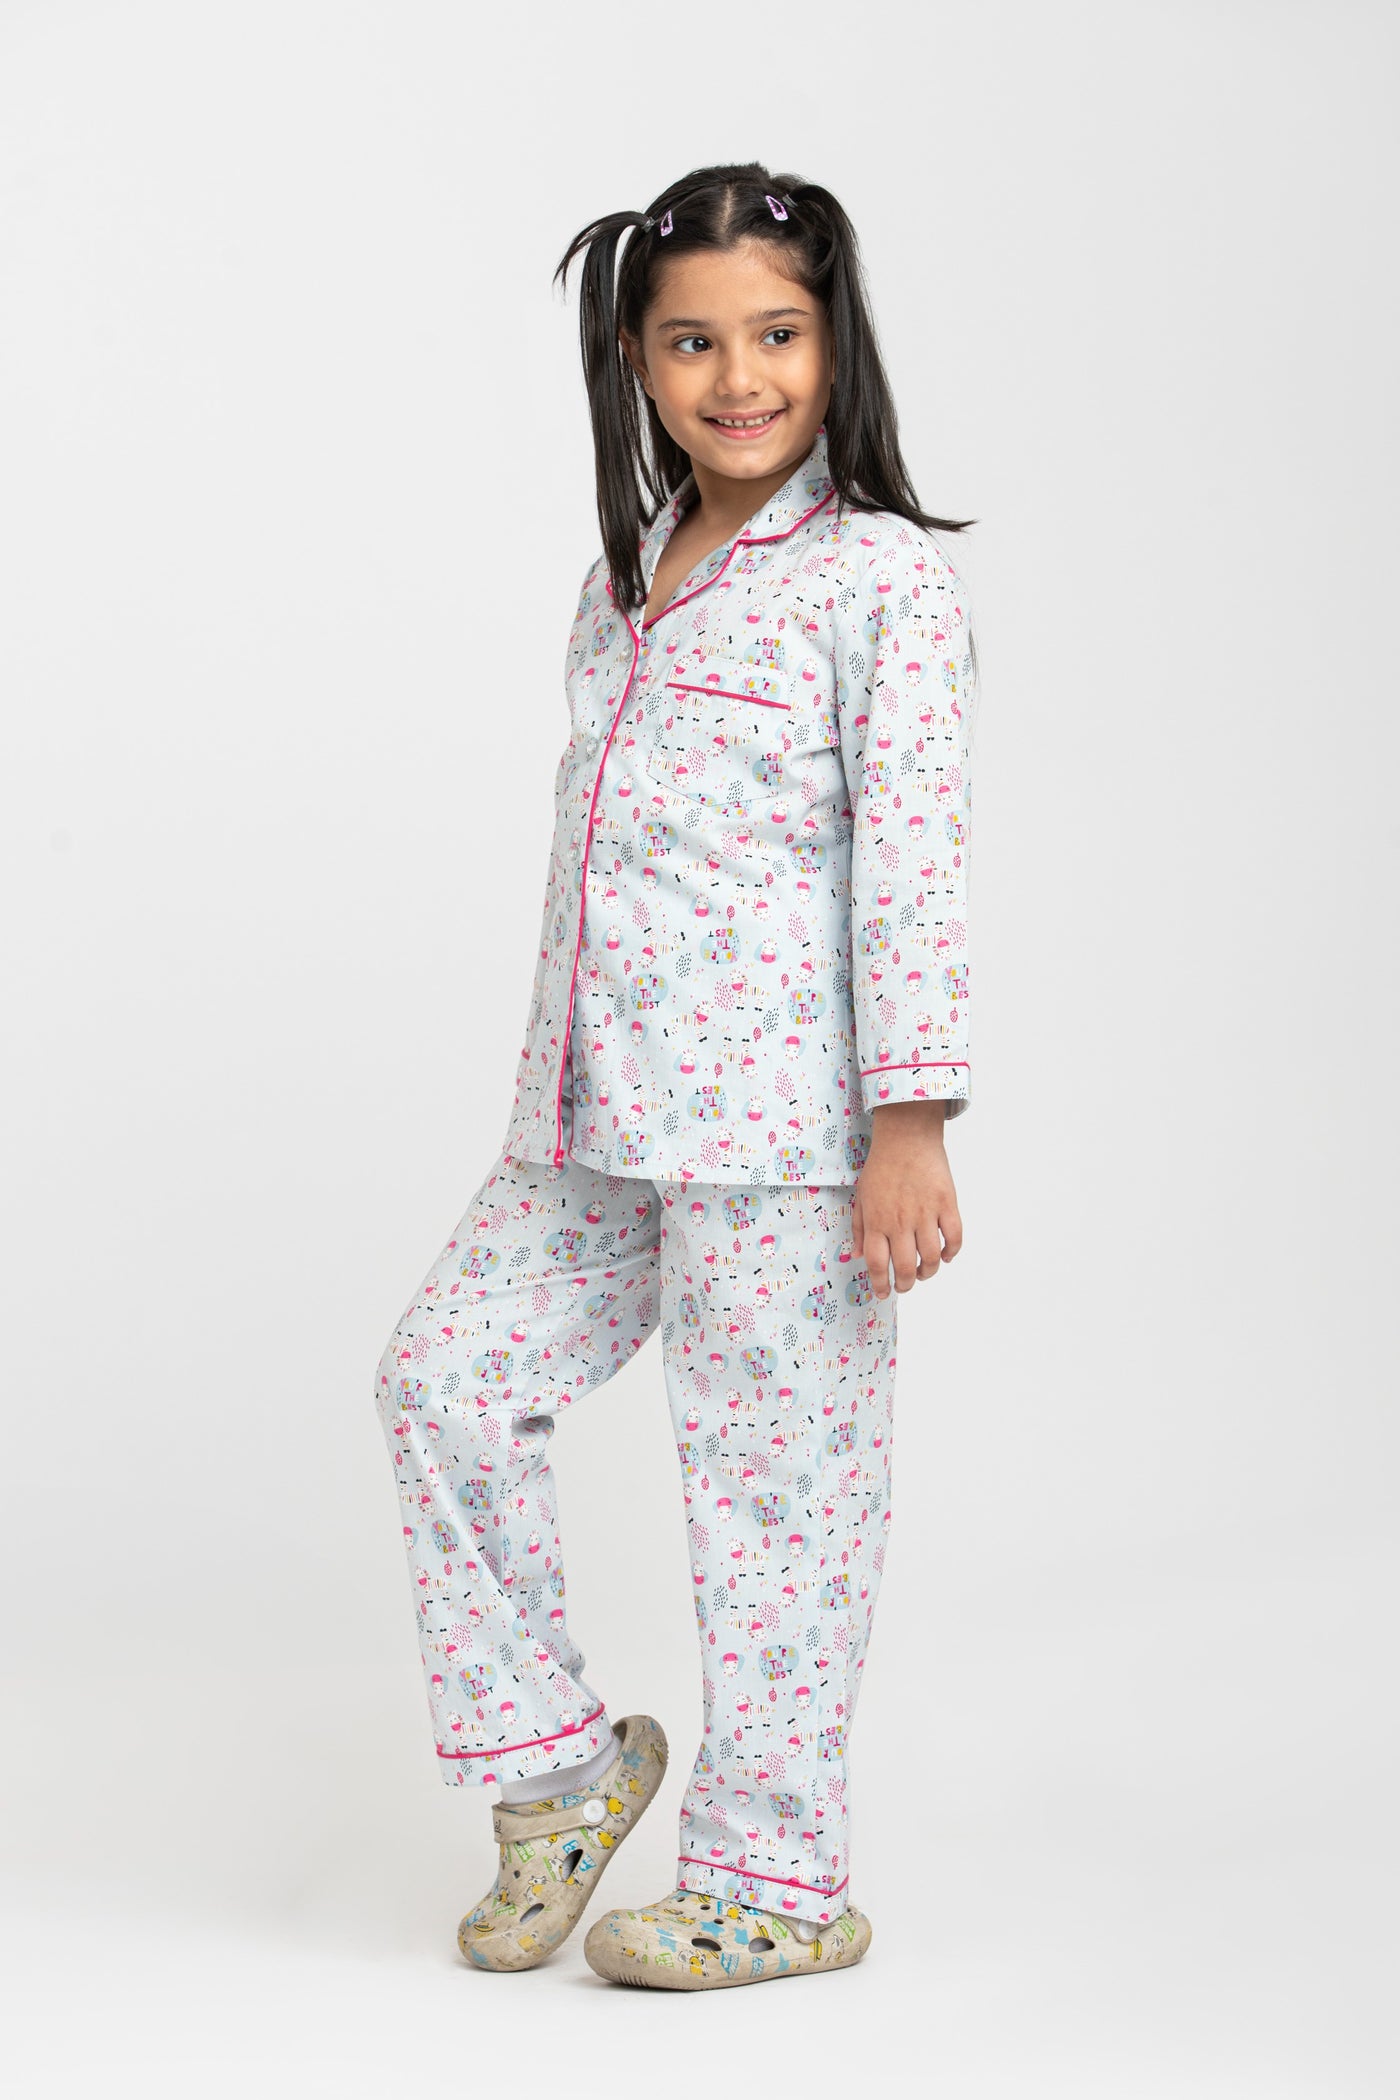 Blue and Pink Rabbit Pyjama Set